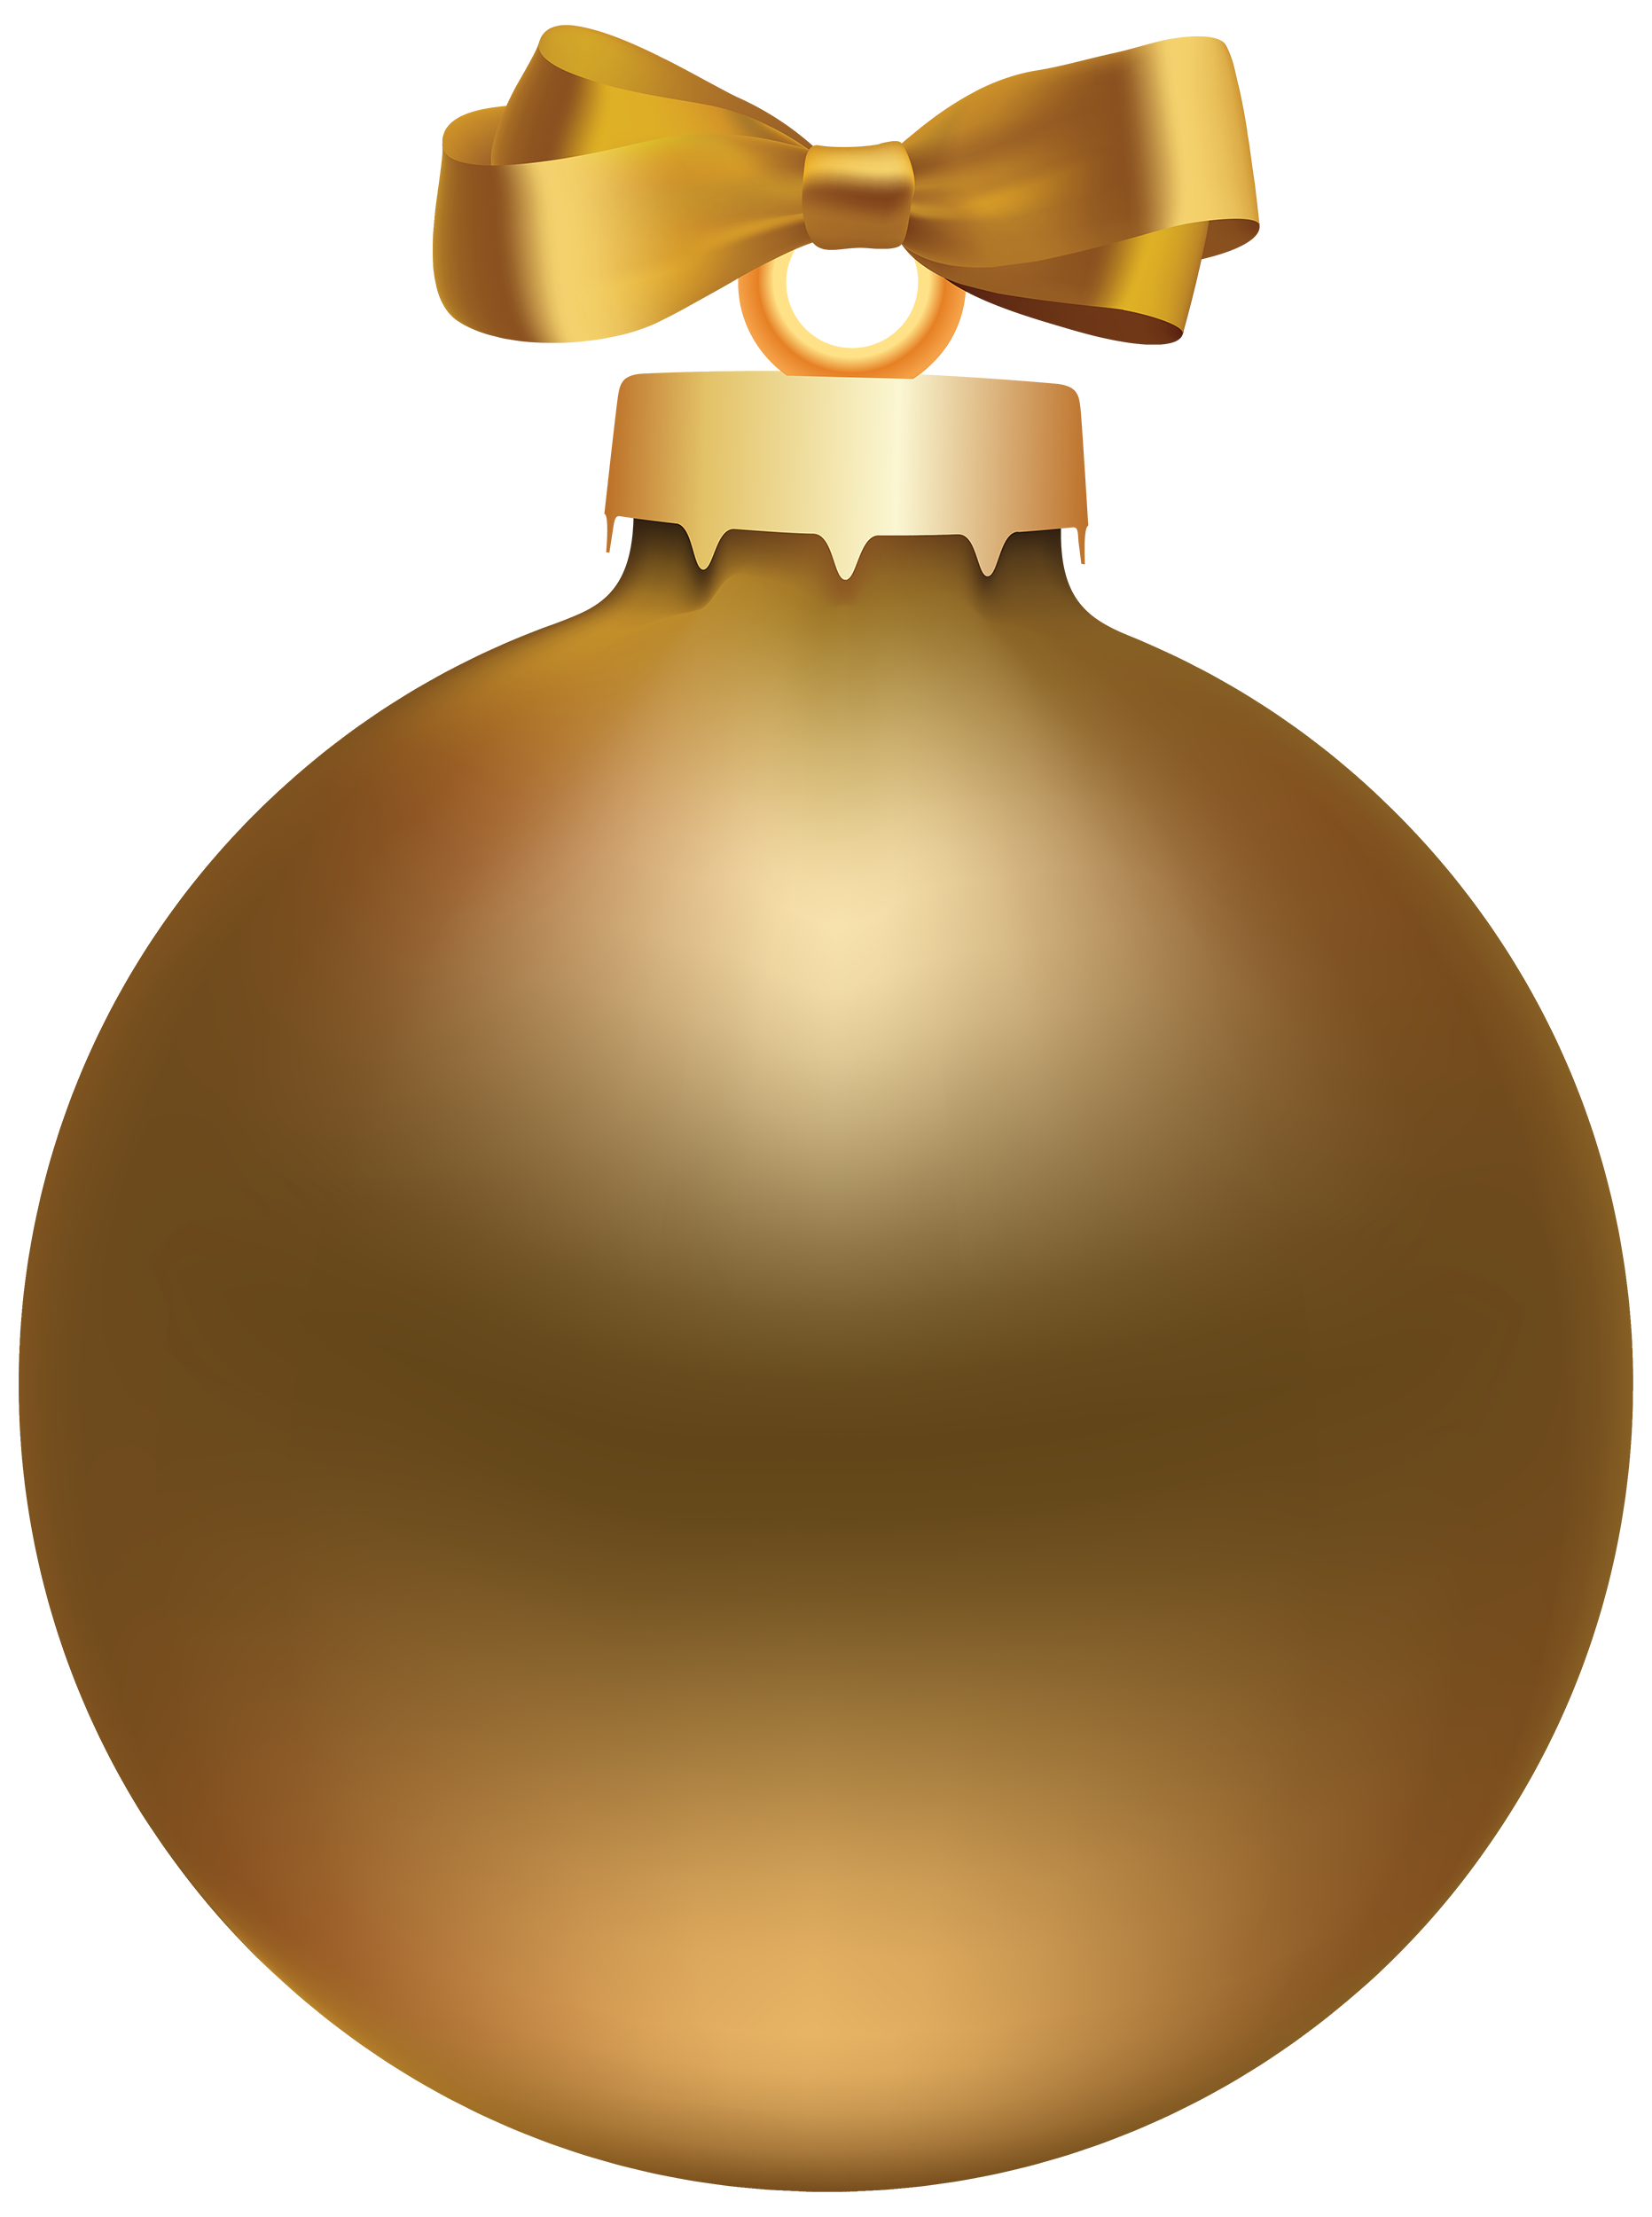 gold christmas balls clip art